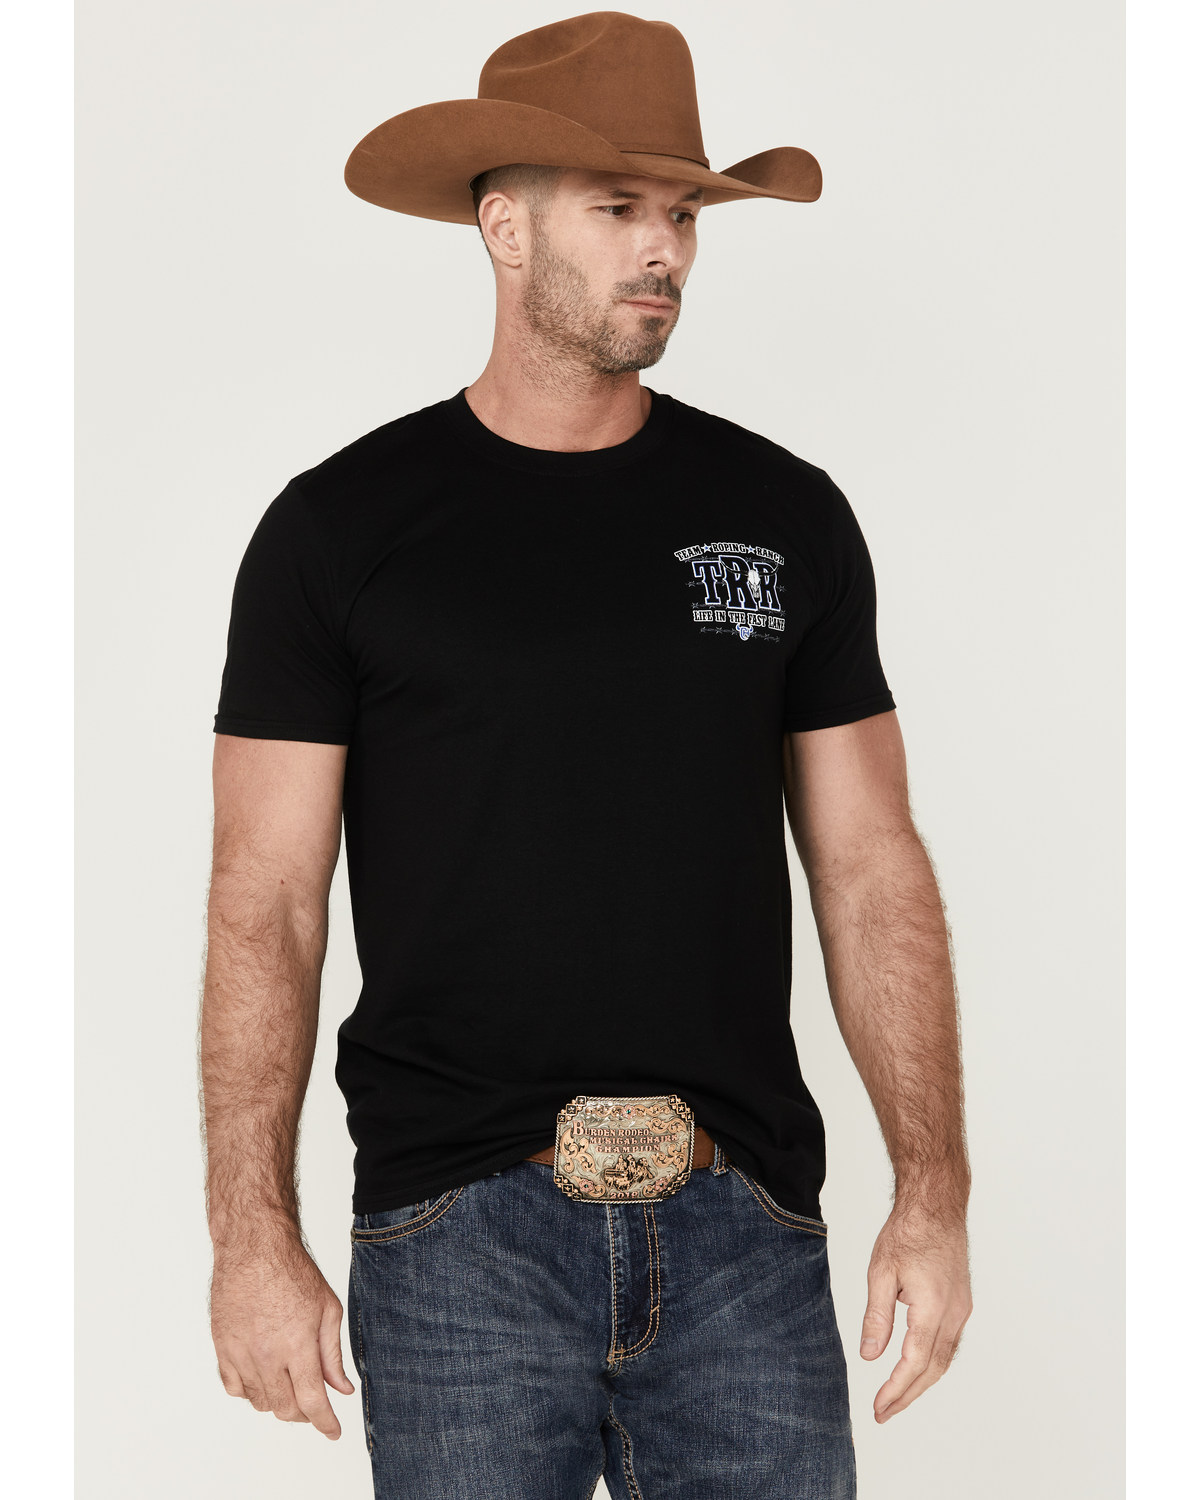 Cowboy Hardware Men's Life The Fast Lane Graphic T-Shirt